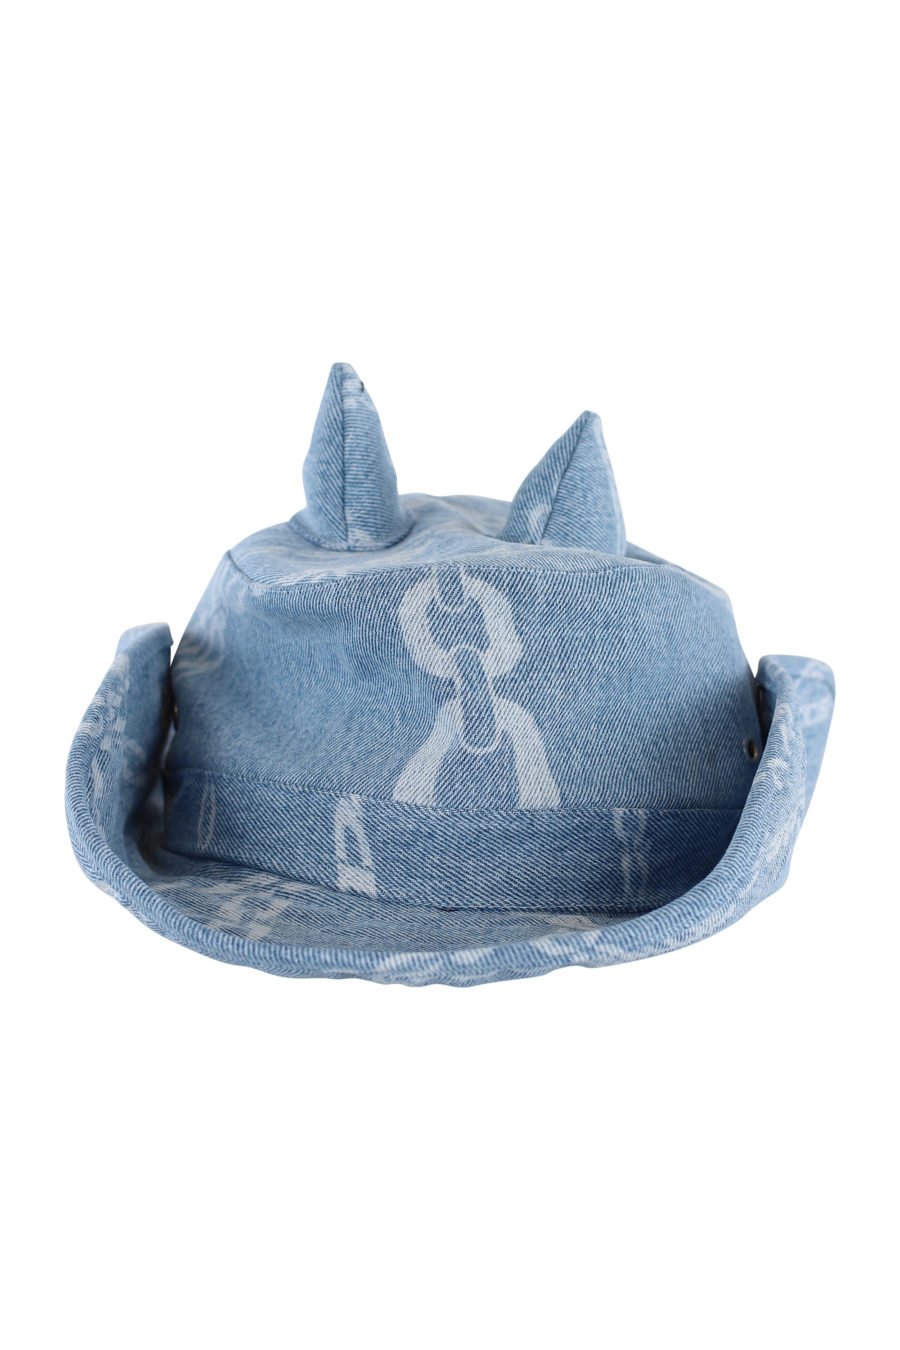 Sombrero azul denim - IMG 1519